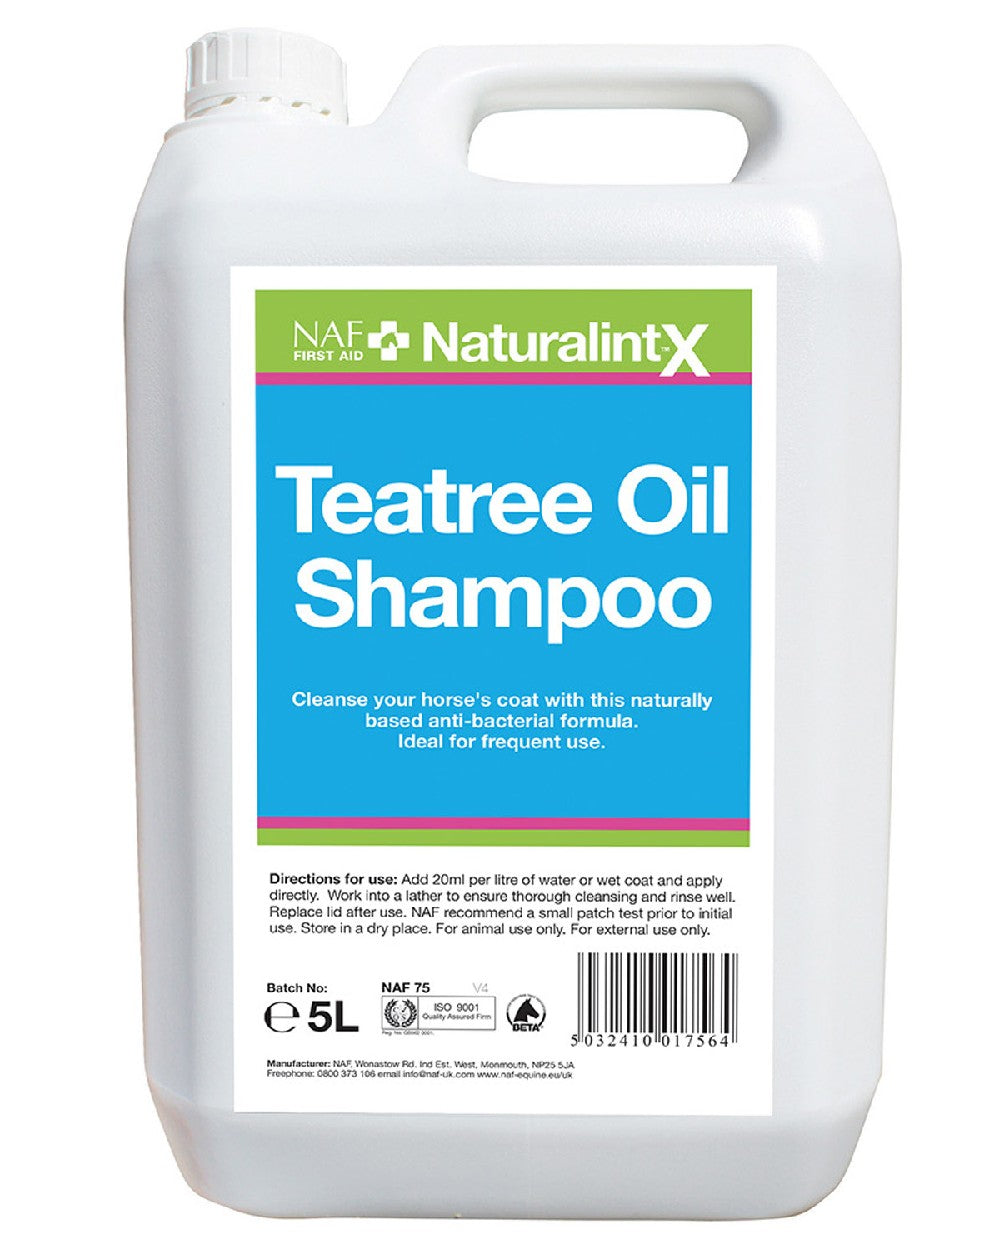 NAF Naturalintx Teatree Oil Shampoo 5lt on white background